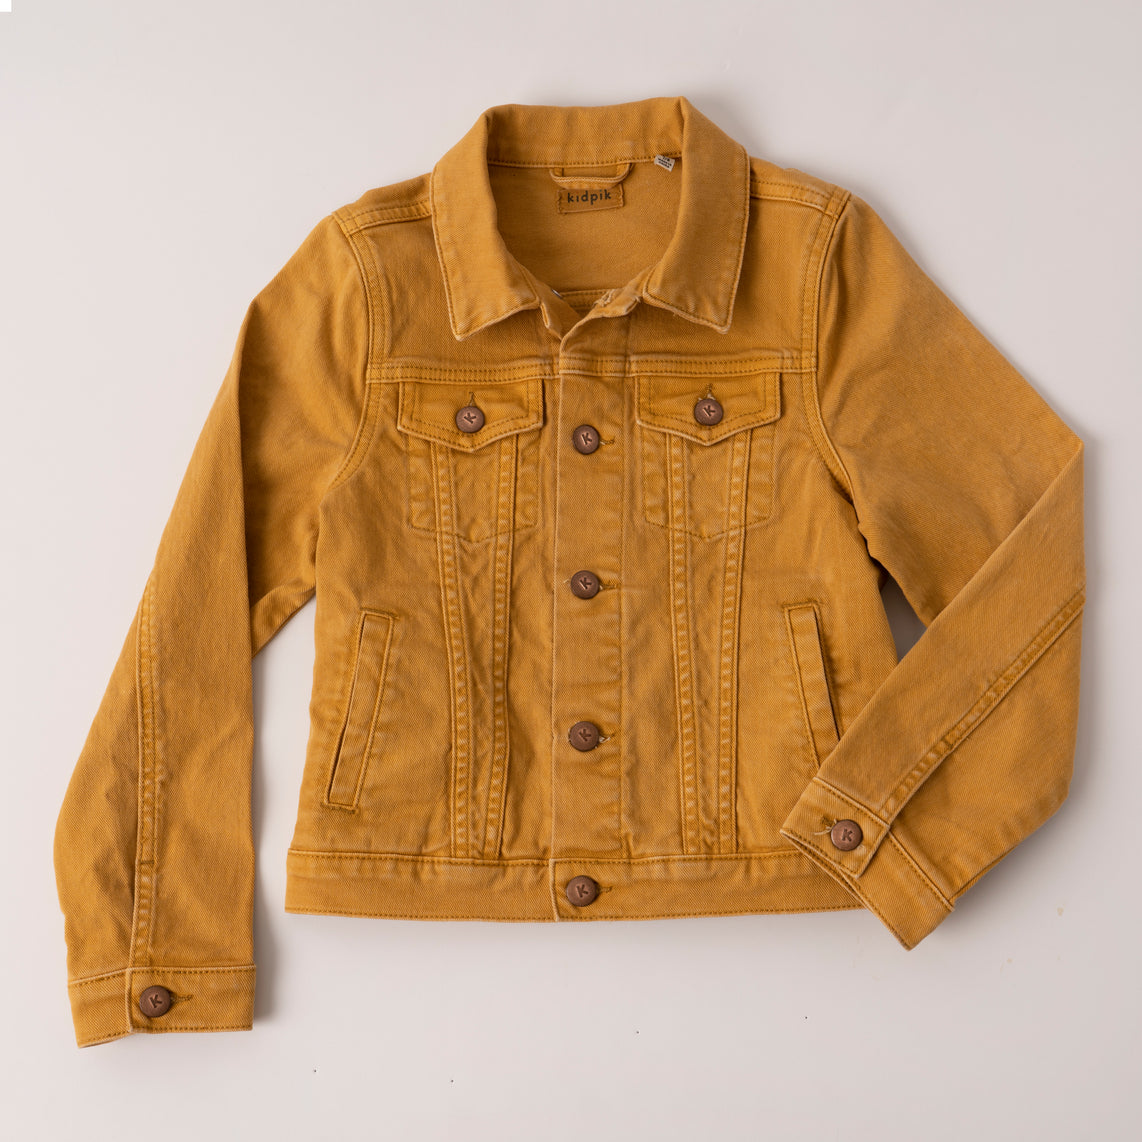 KIDPIK Boys Stretch Garment Dyed Colored Denim Jean Jacket, Size: 2T ...